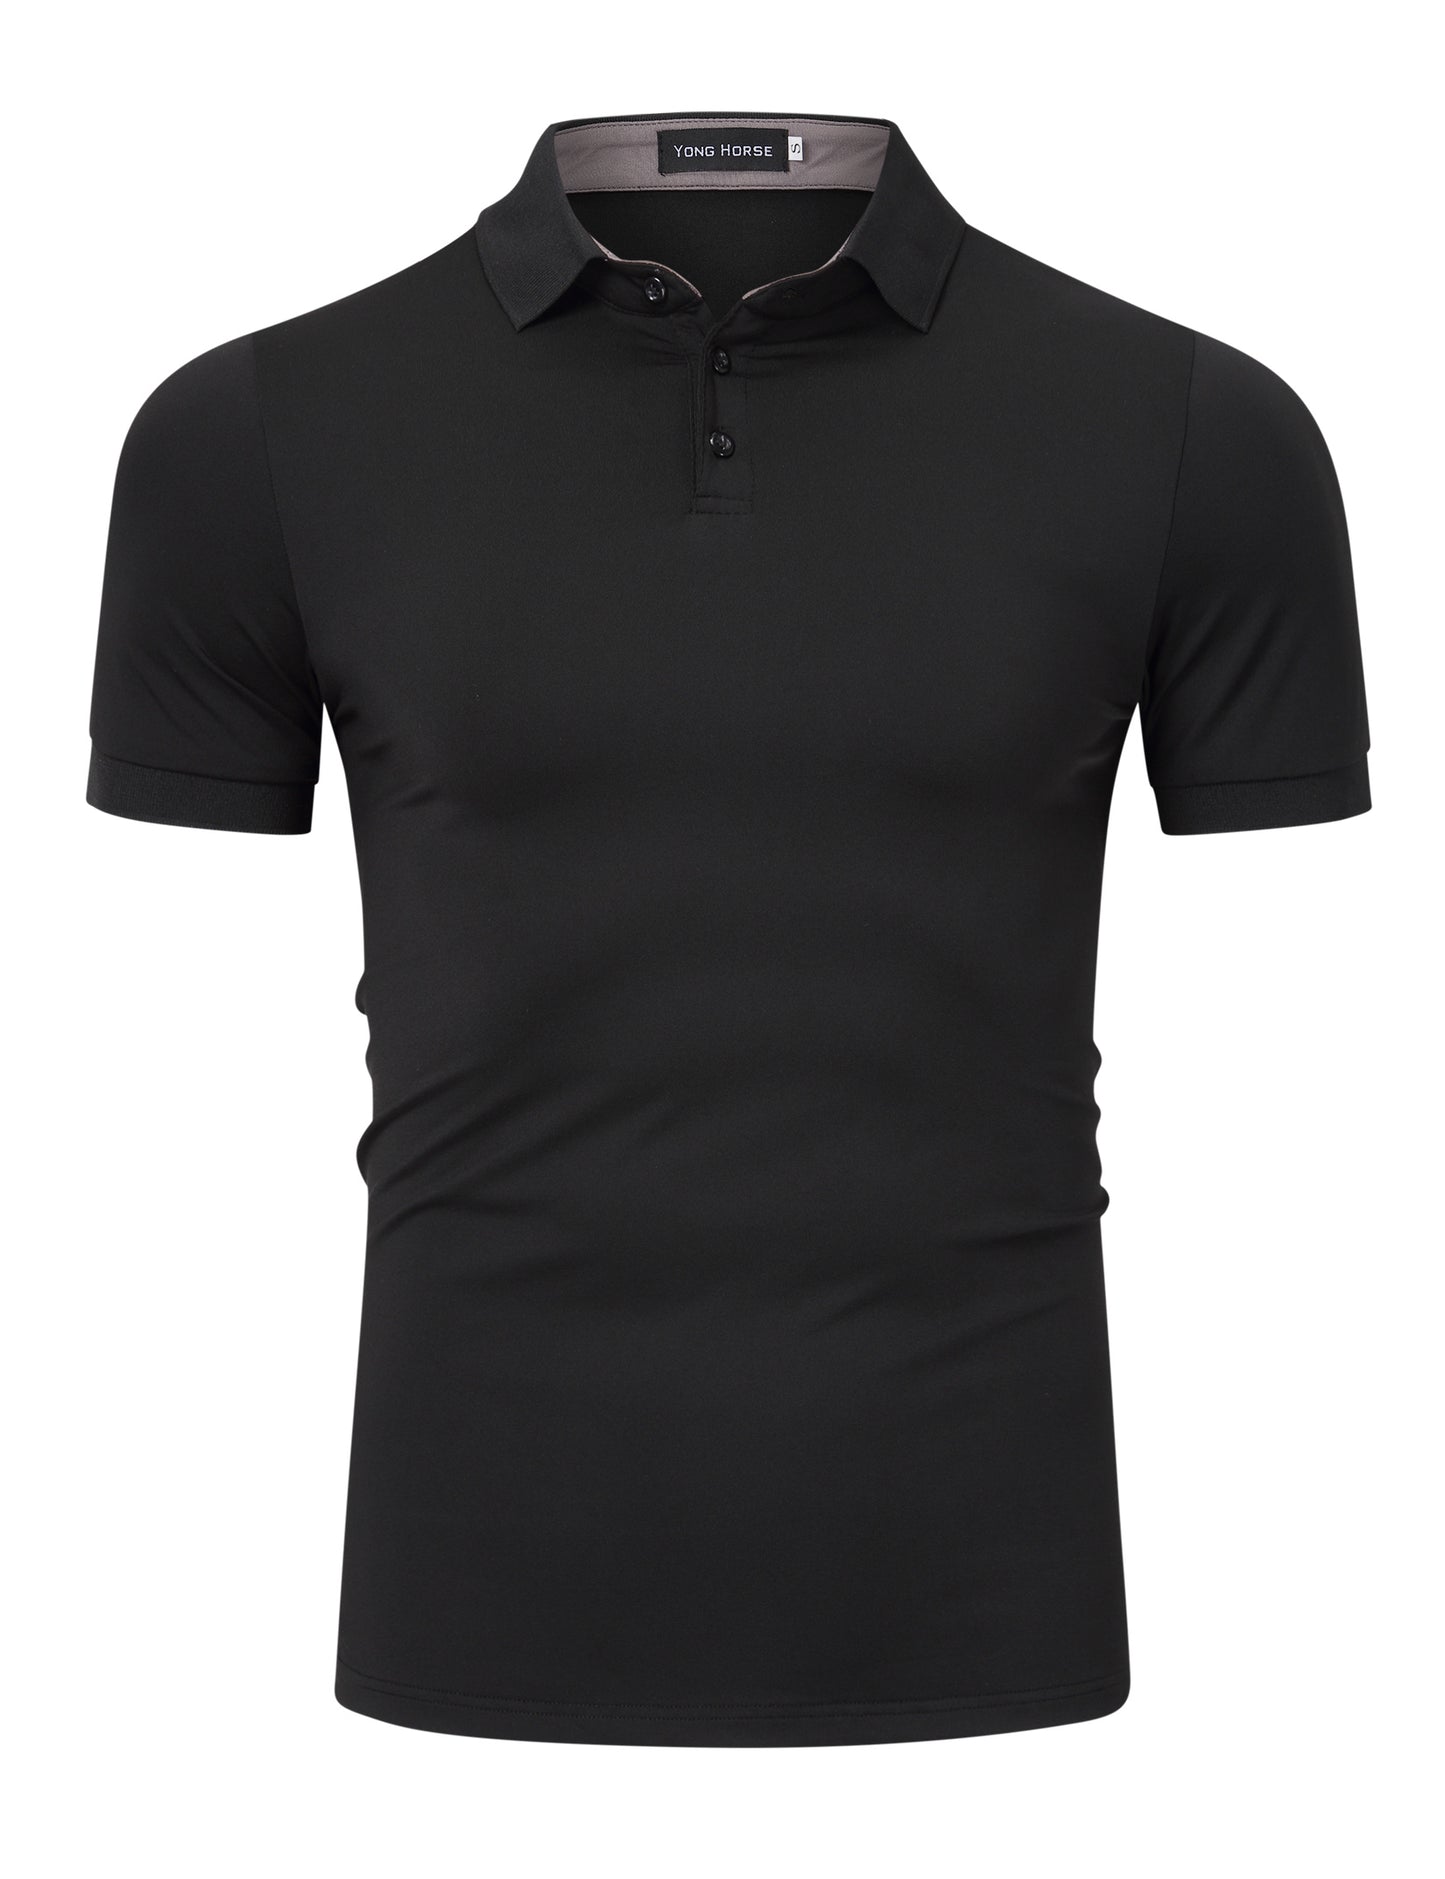 YESFASHION Men's Casual Golf Polo Short Sleeve Shirts